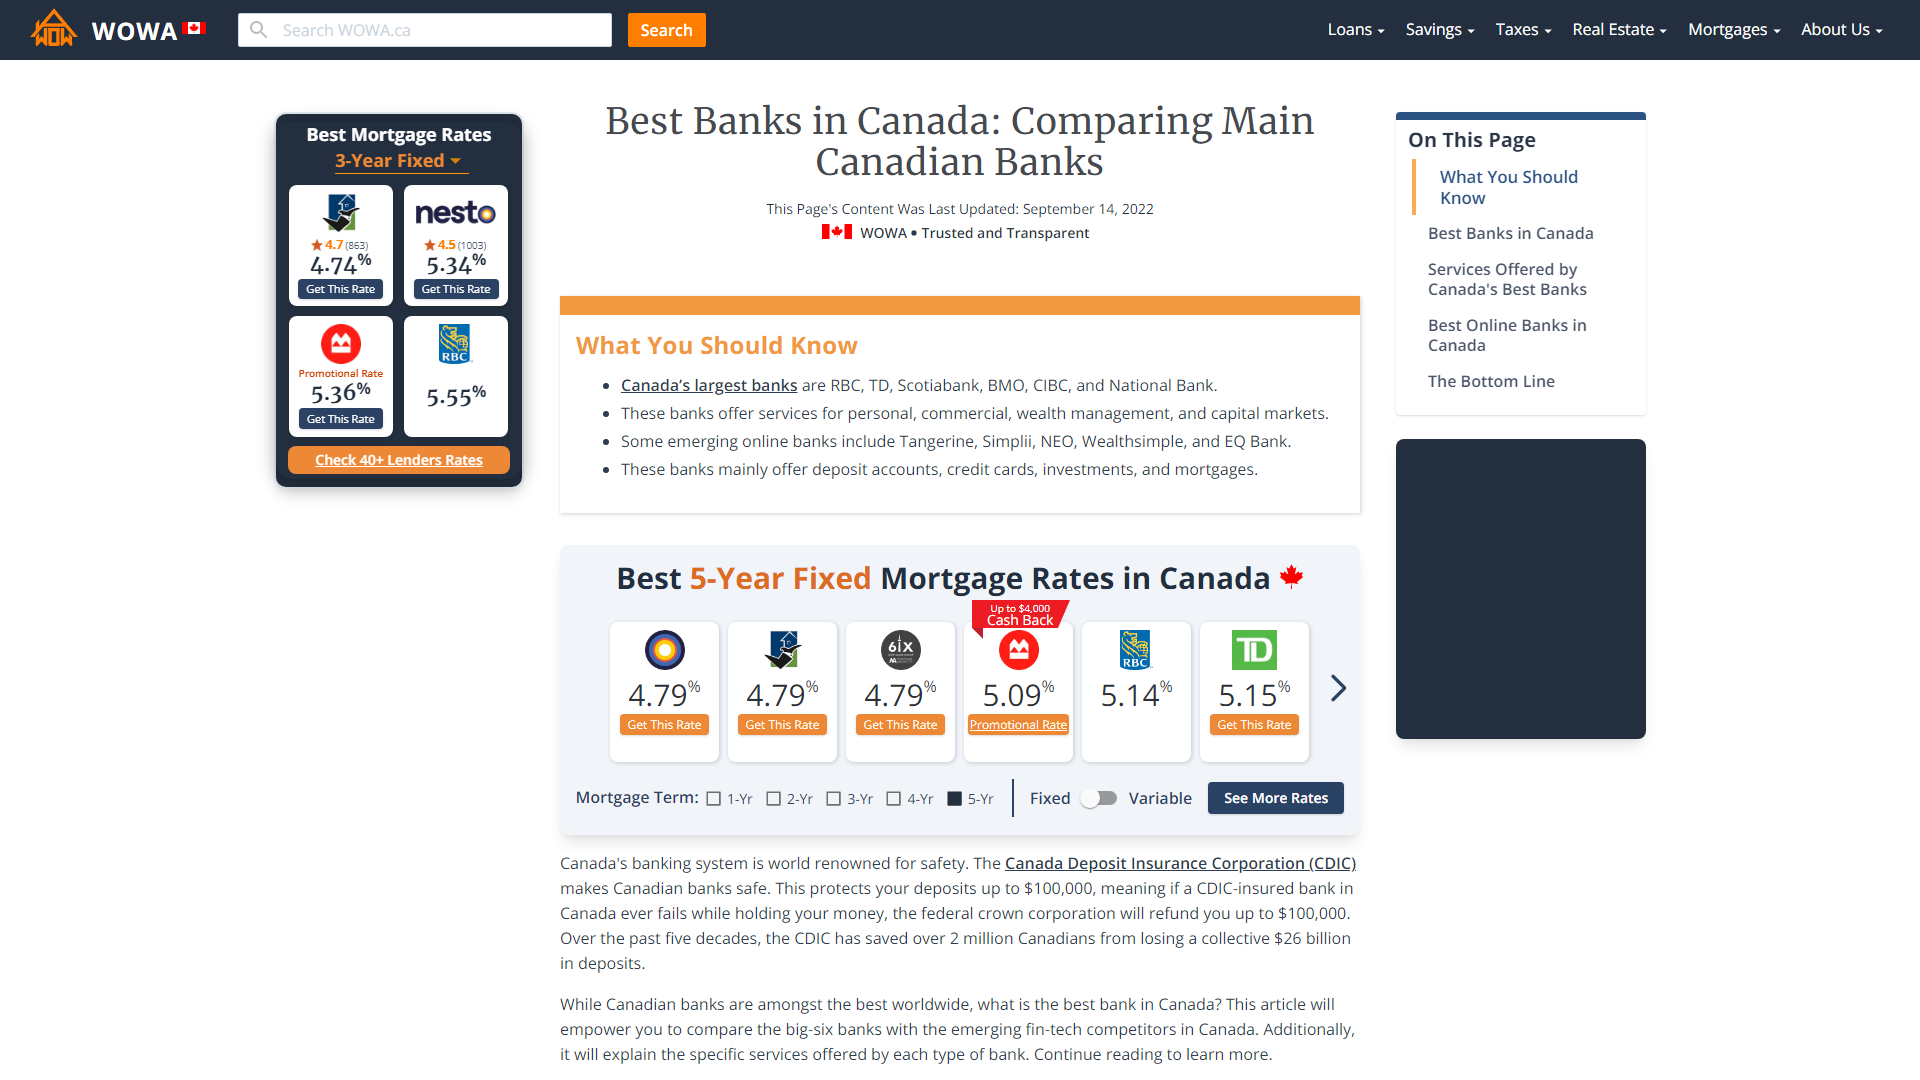 Best Banks in Canada Full Comparison WOWA.ca